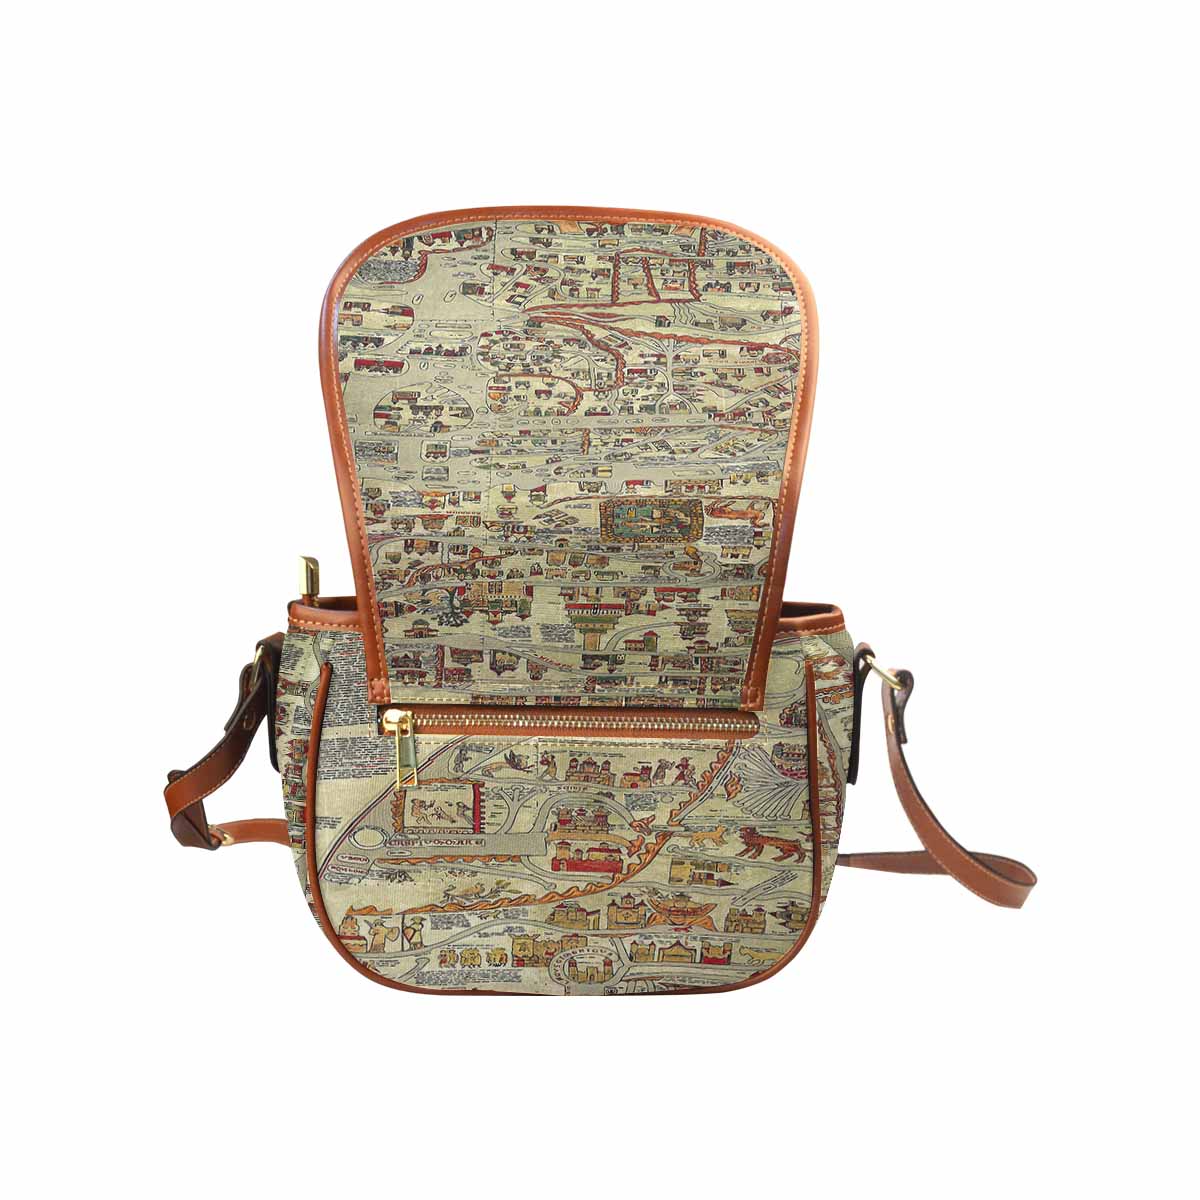 Antique Map design Handbag, saddle bag, Design 27